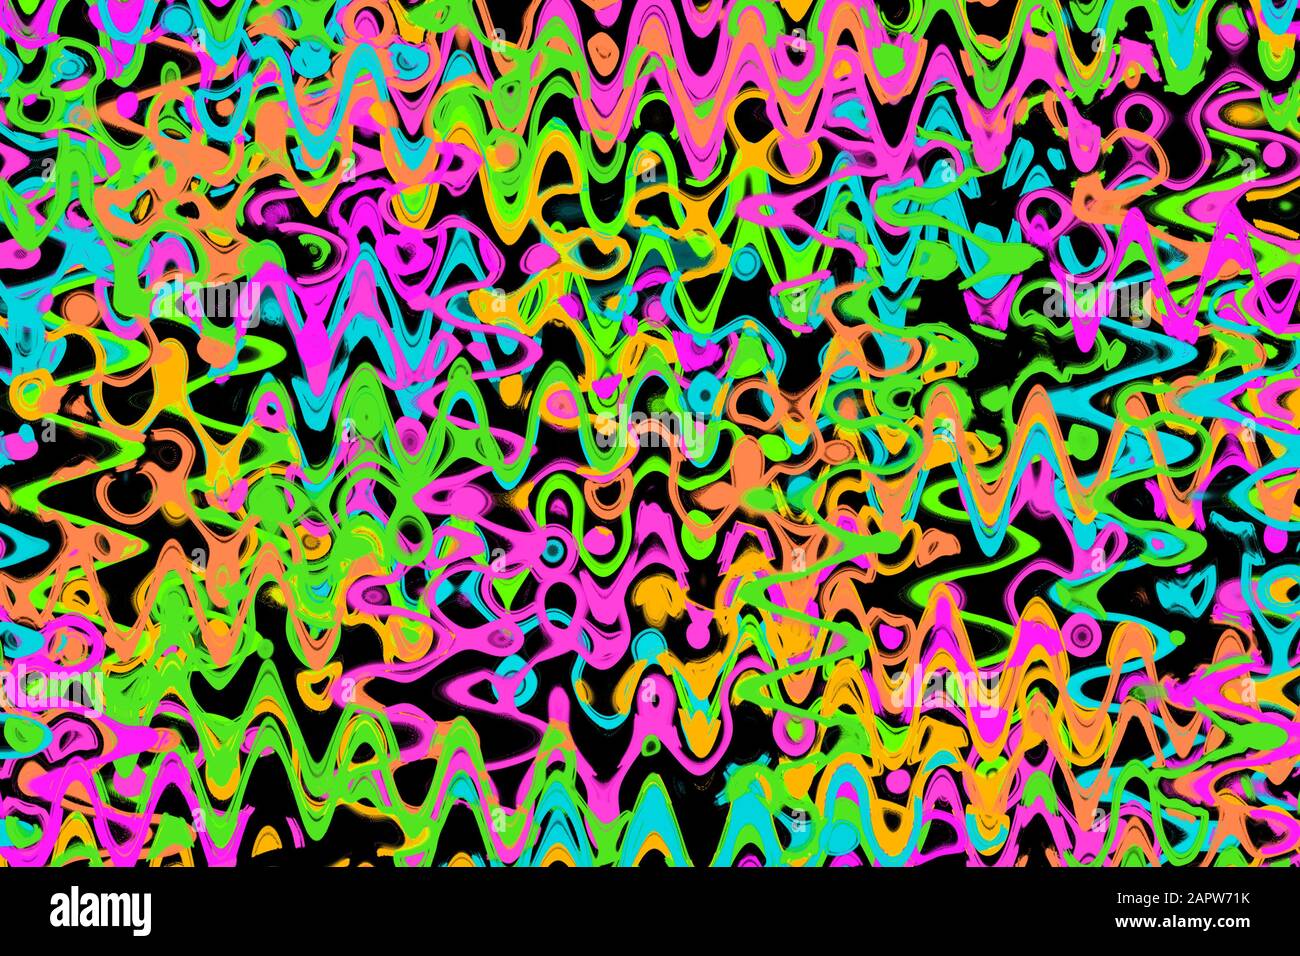 Une ligne ondulée abstract background image. Banque D'Images